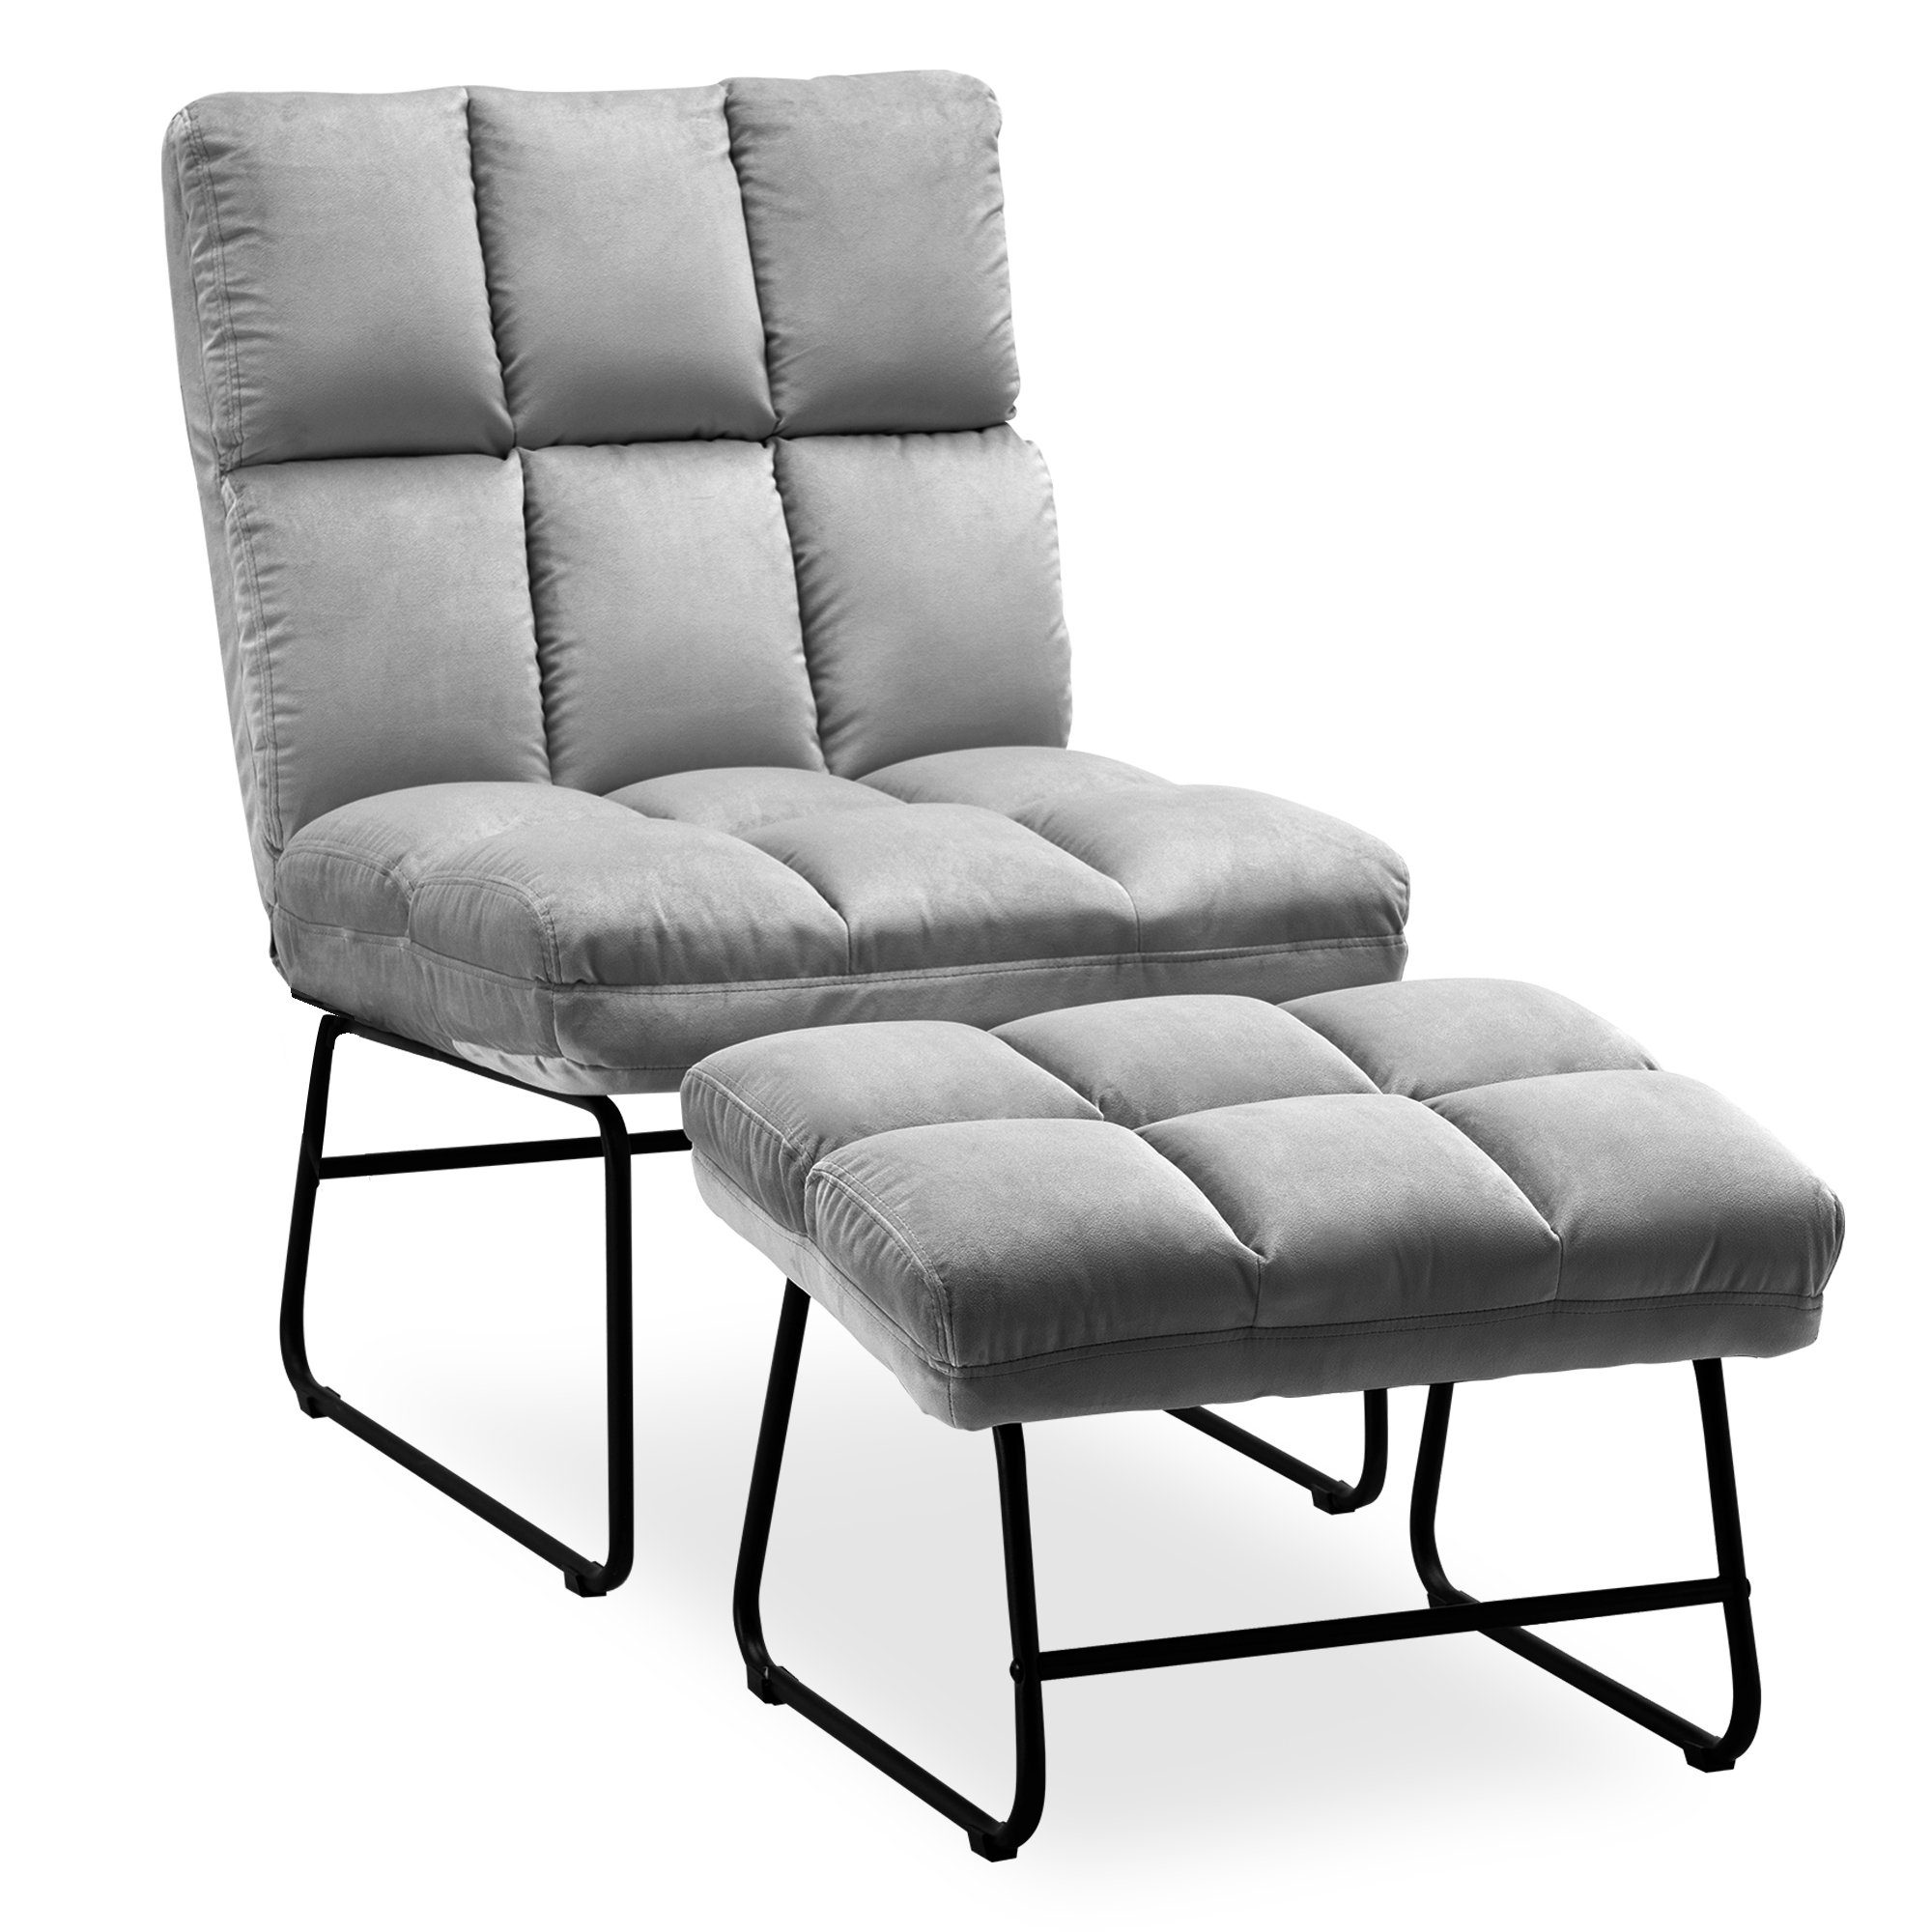 0016, Fernsehsessel Relaxsessel mit Loungesessel Hocker moderner MCombo Wohnzimmer, TV-Sessel Stuhl Sessel MCombo / 0014 für